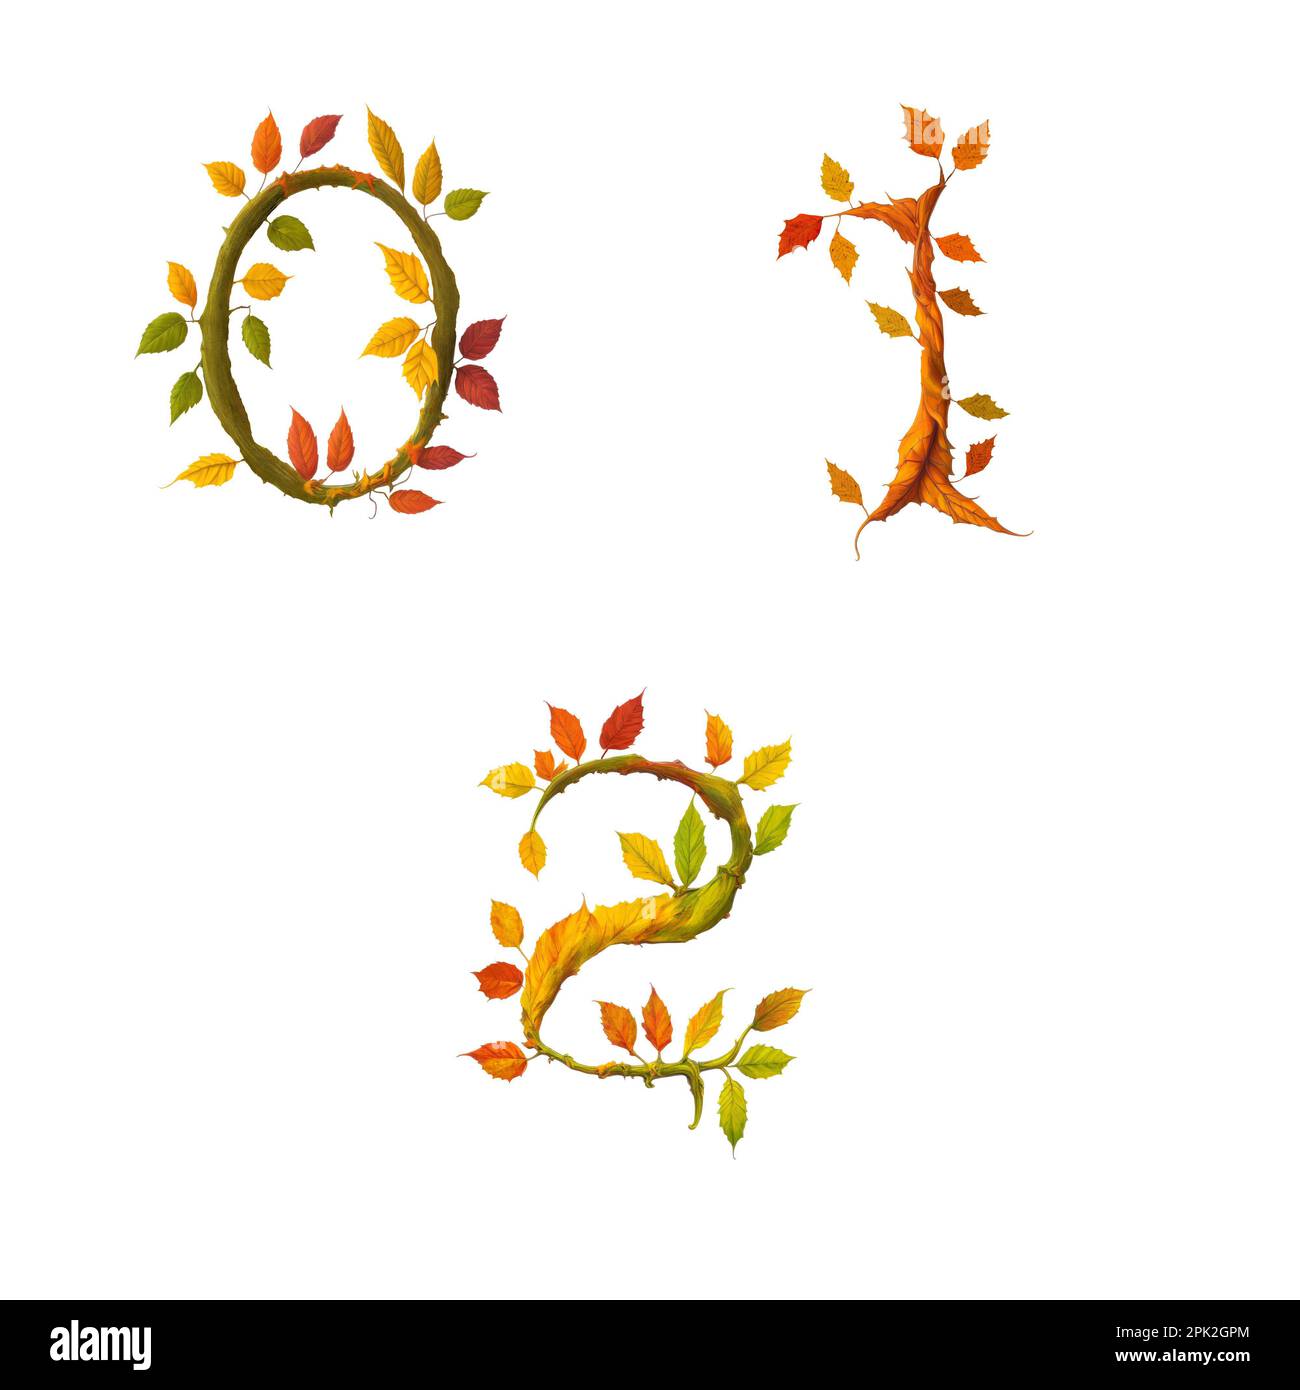 3D illustration of stylized autumn leaf tree alphabet - digits 0-2 Stock Photo